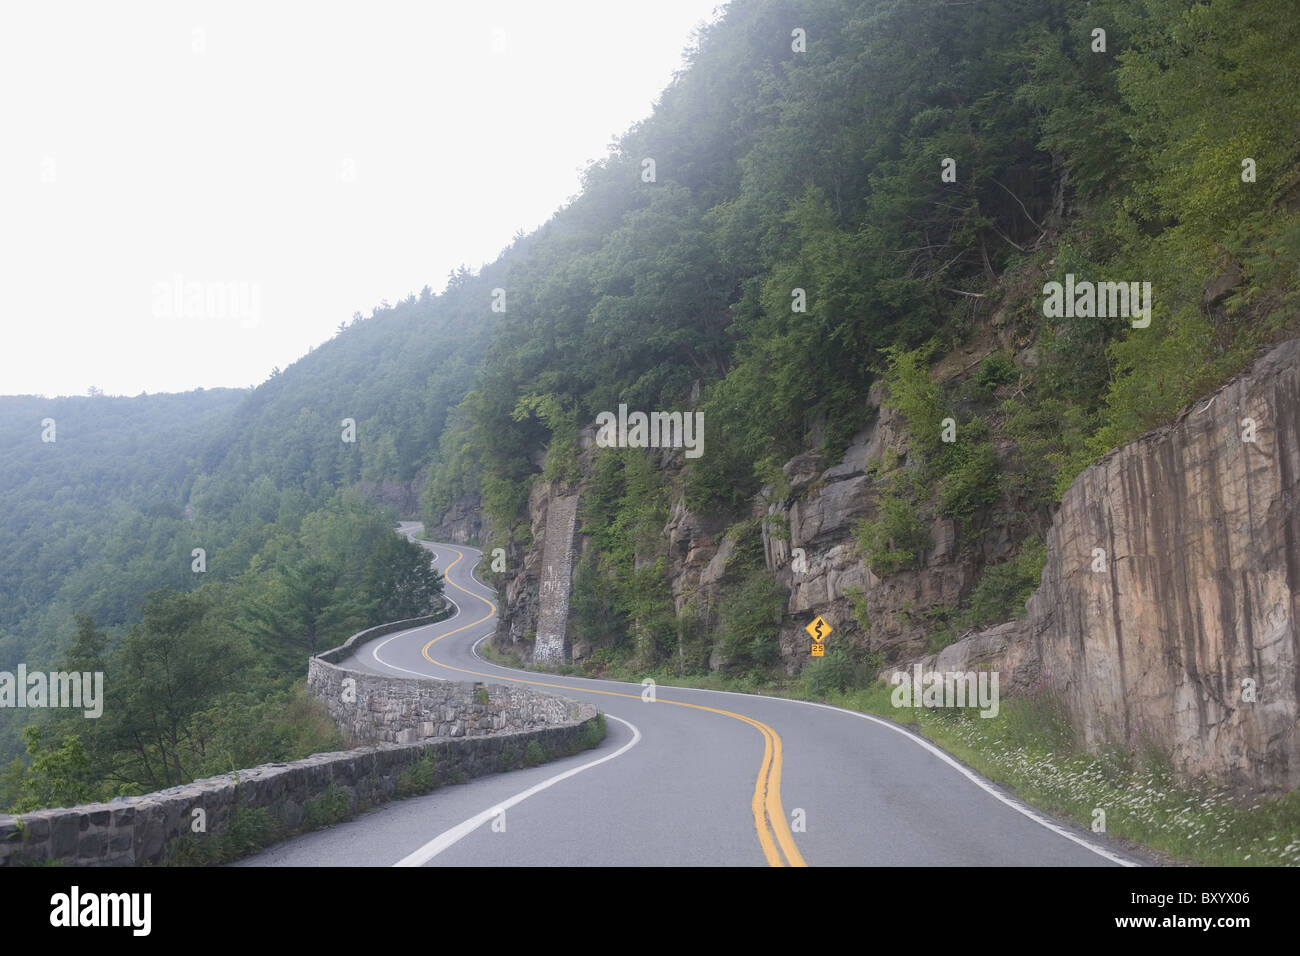 Winding road through mountains Stock Photo